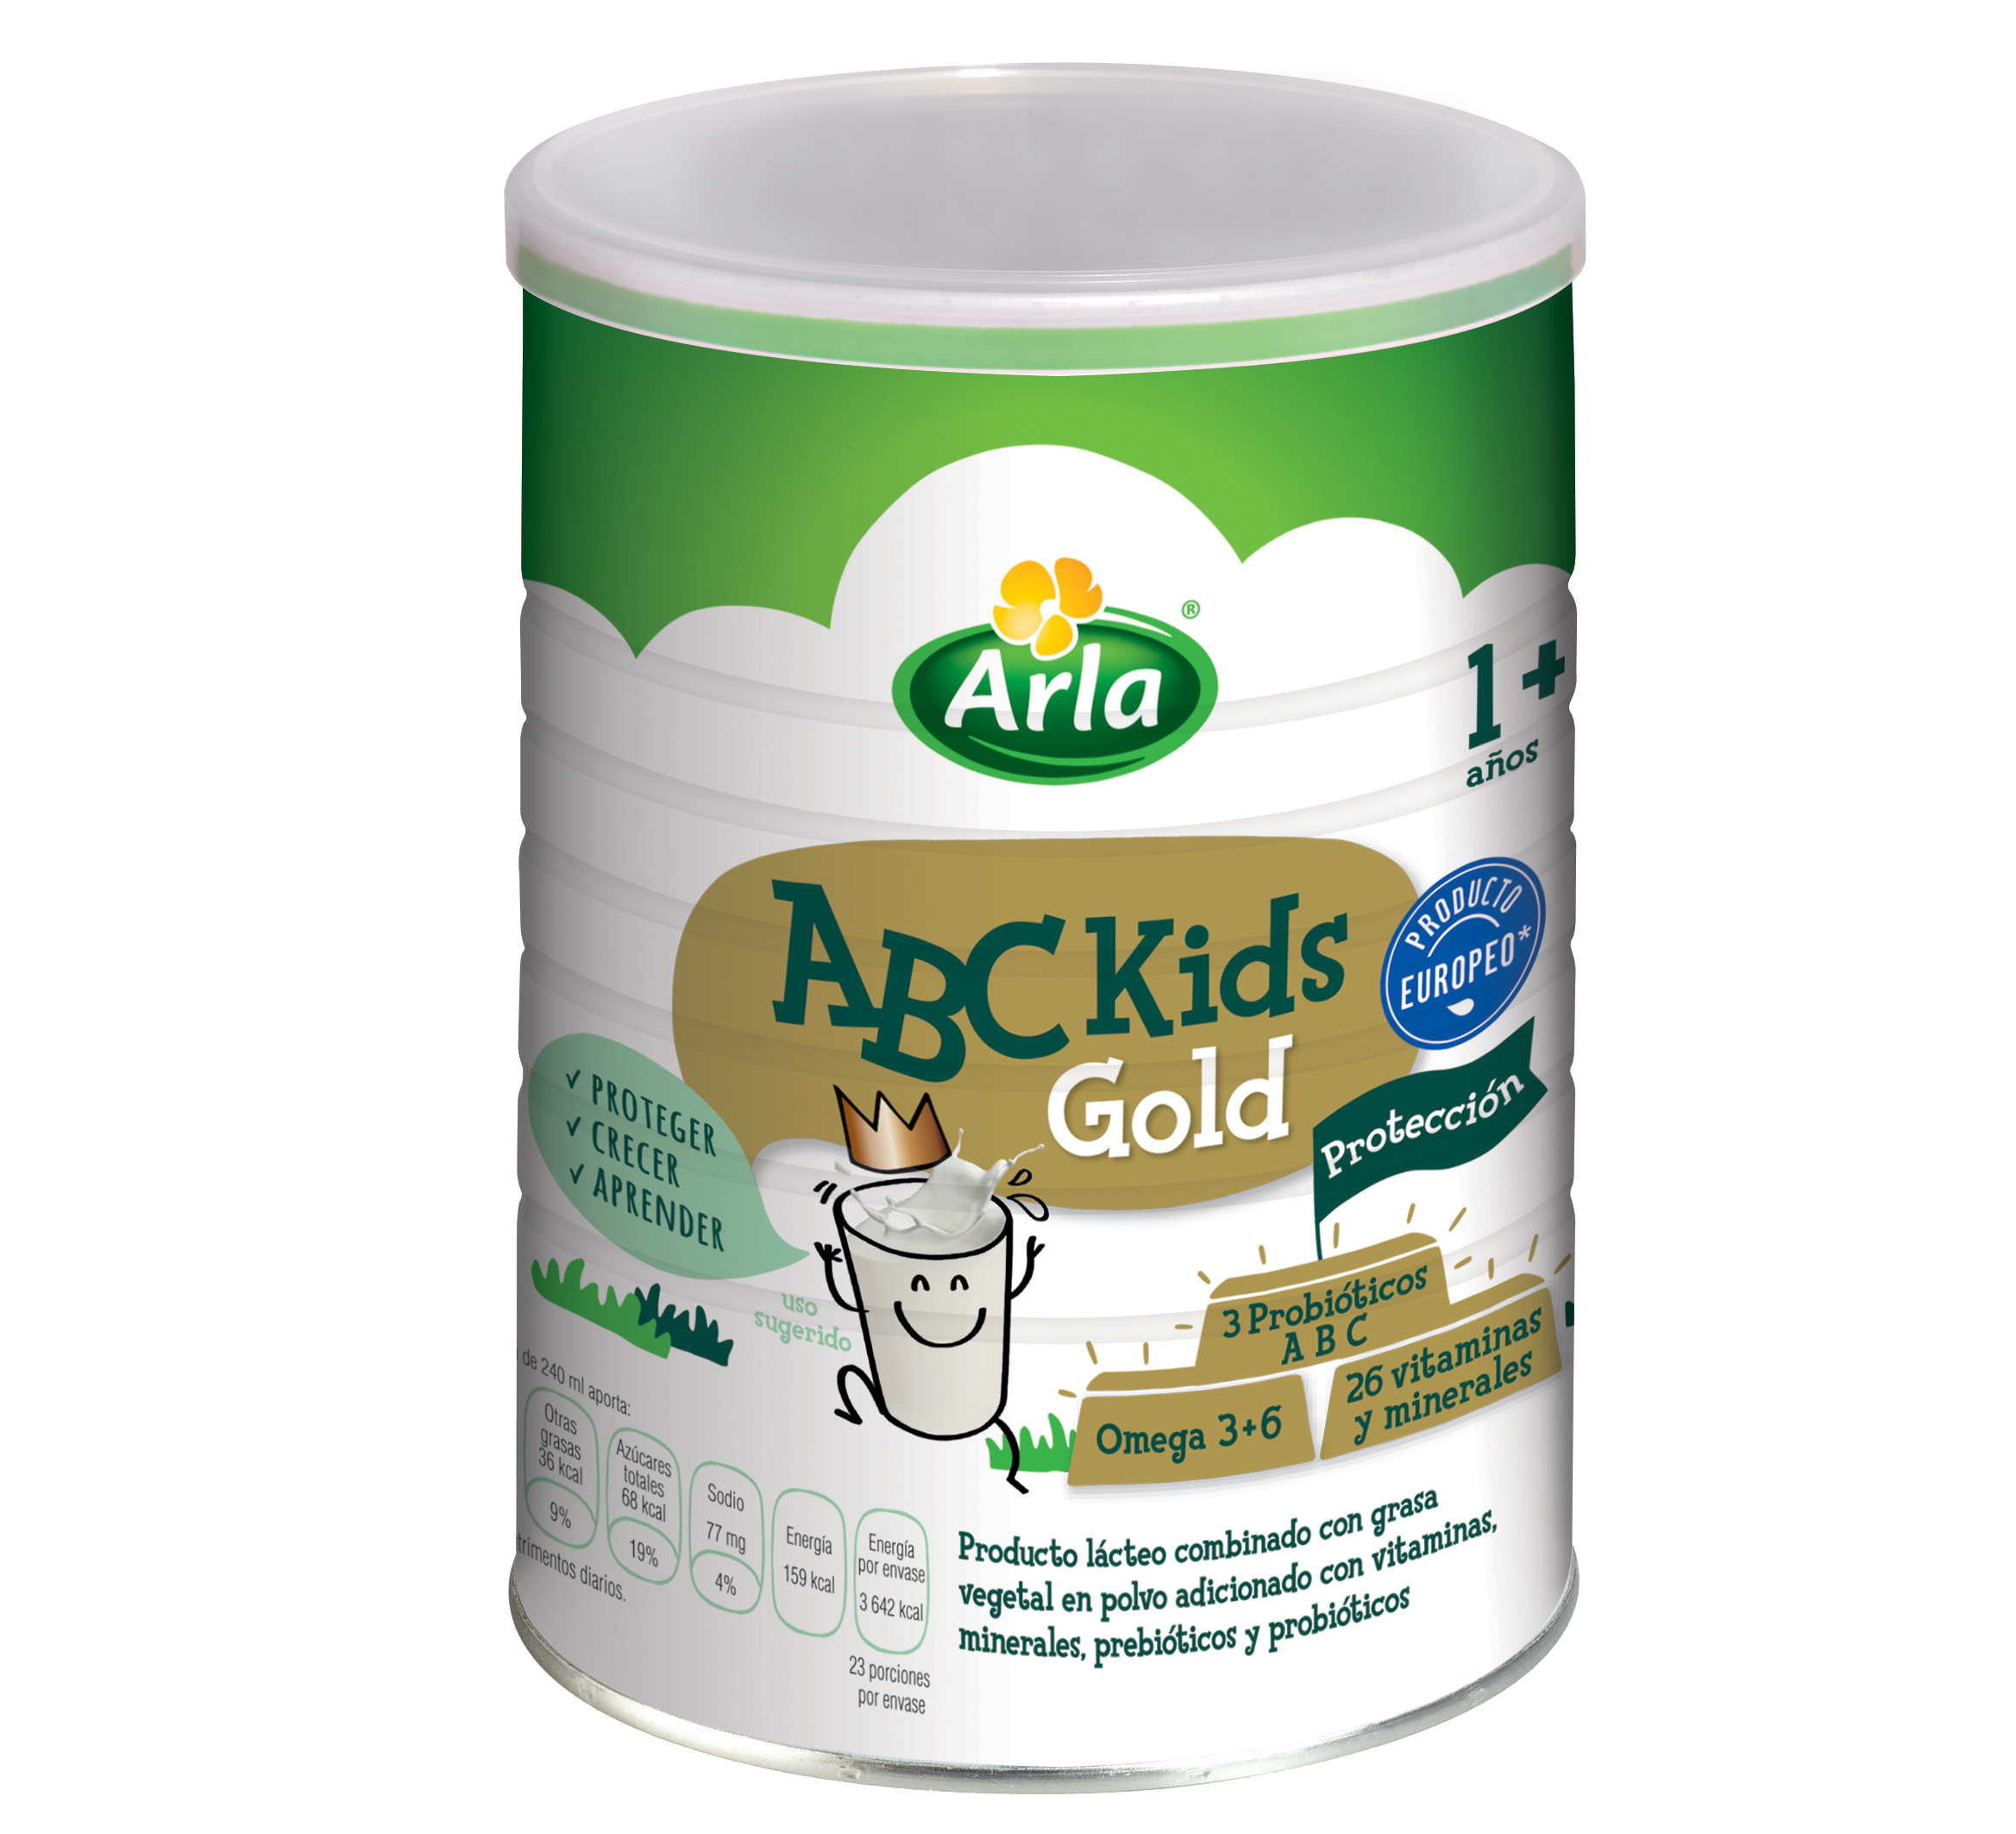 Arla ABC Kids® ABC Kids GOLD Lata 800g